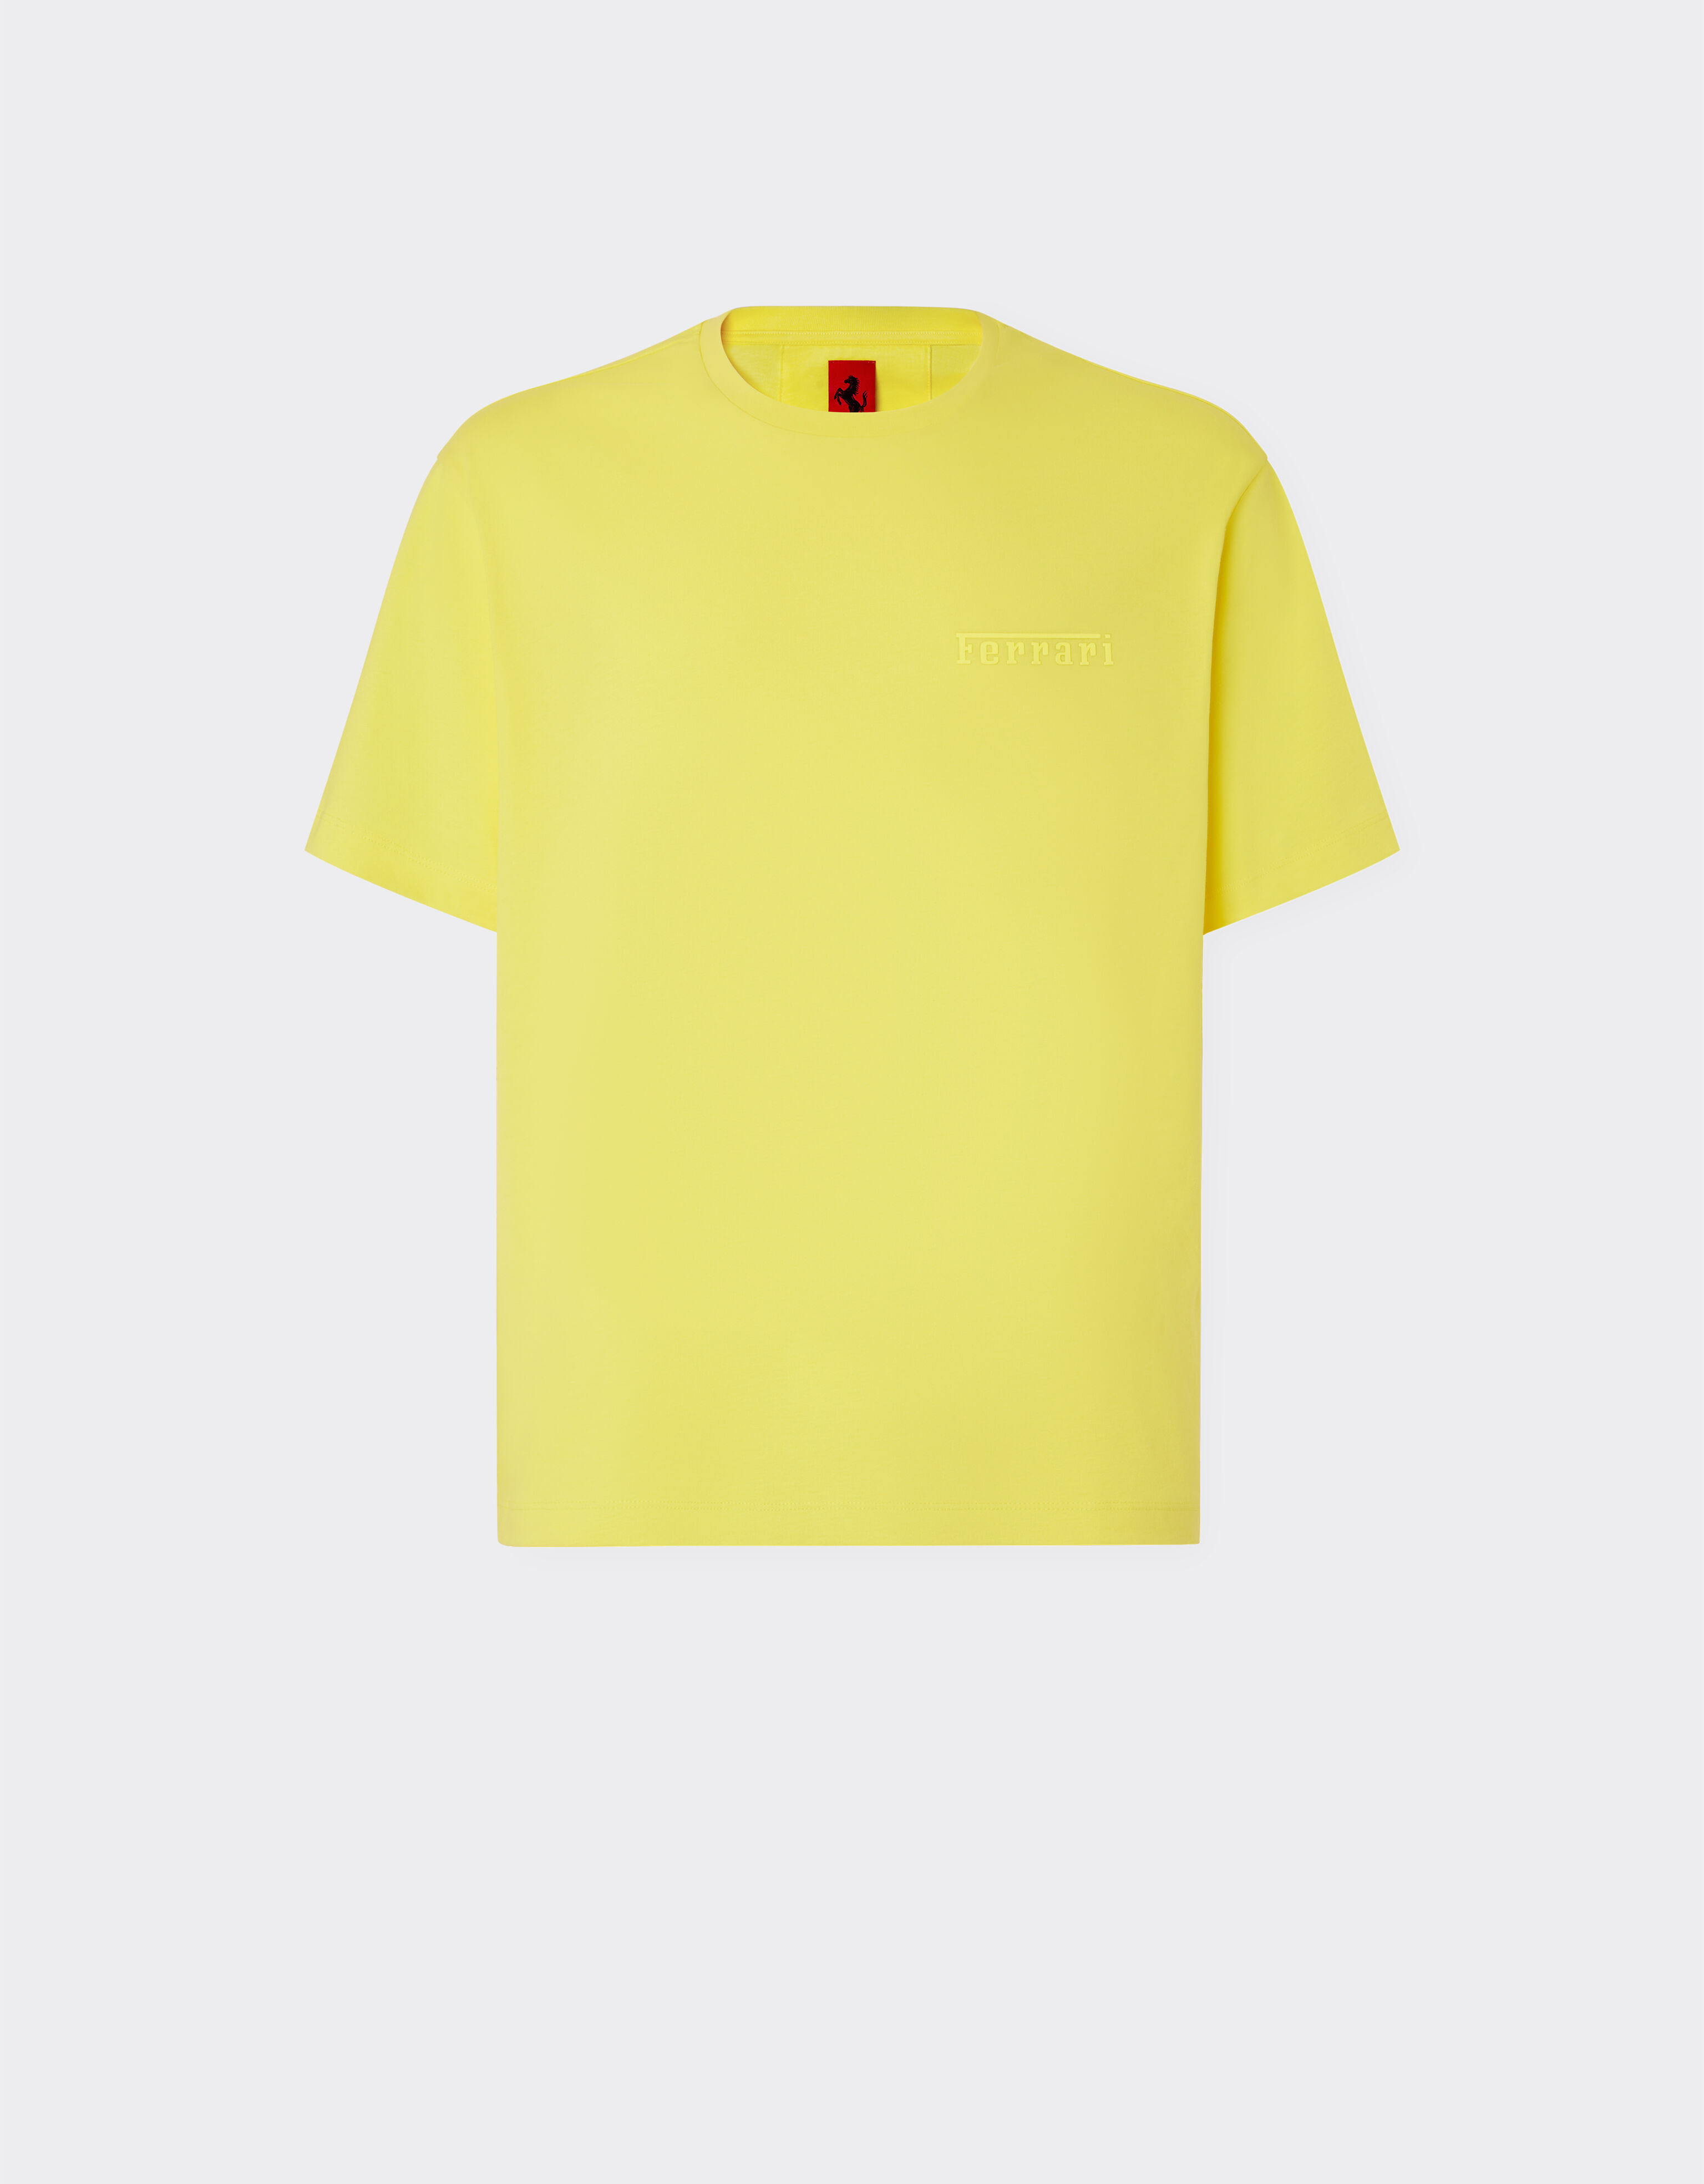 Ferrari Cotton T-shirt with Ferrari logo Giallo Modena 48114f